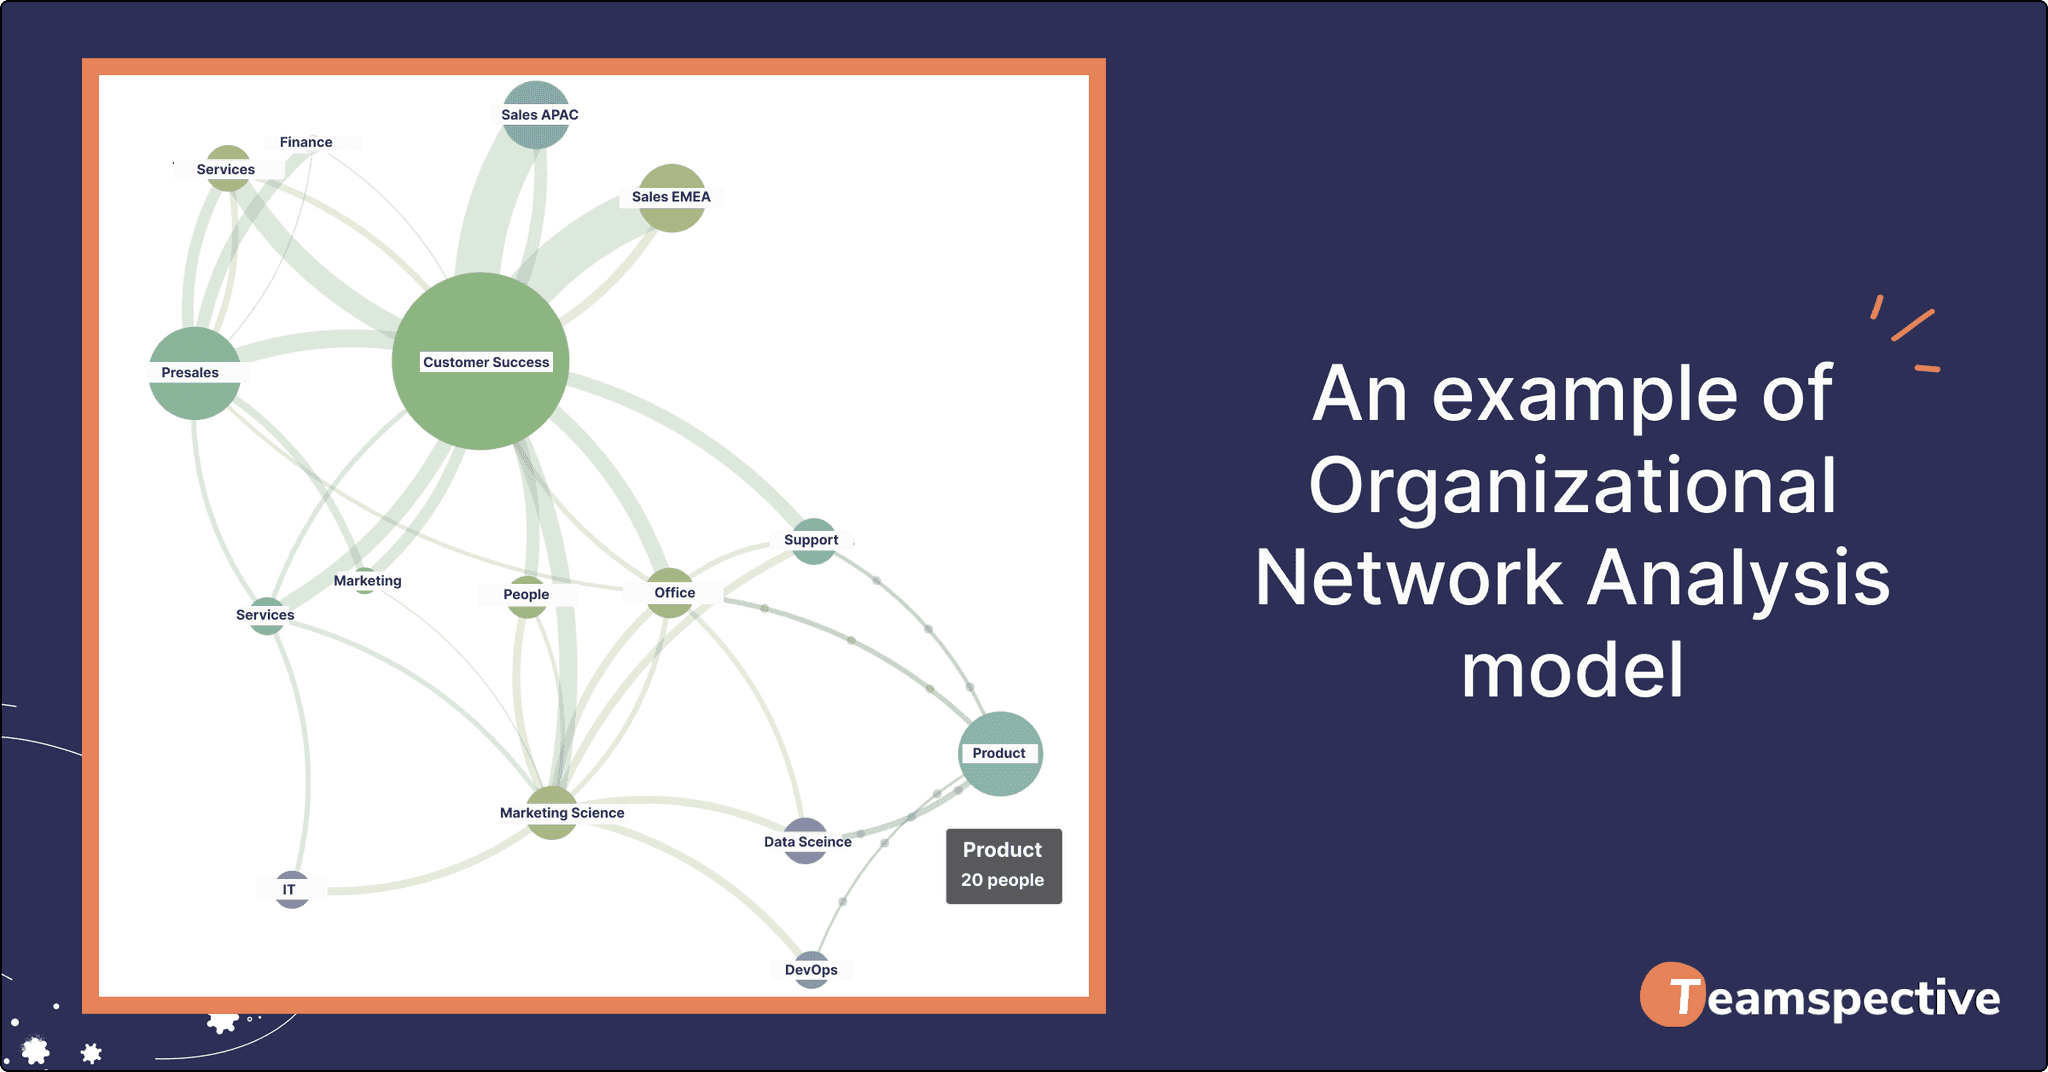 An example of an organizational network analysis model